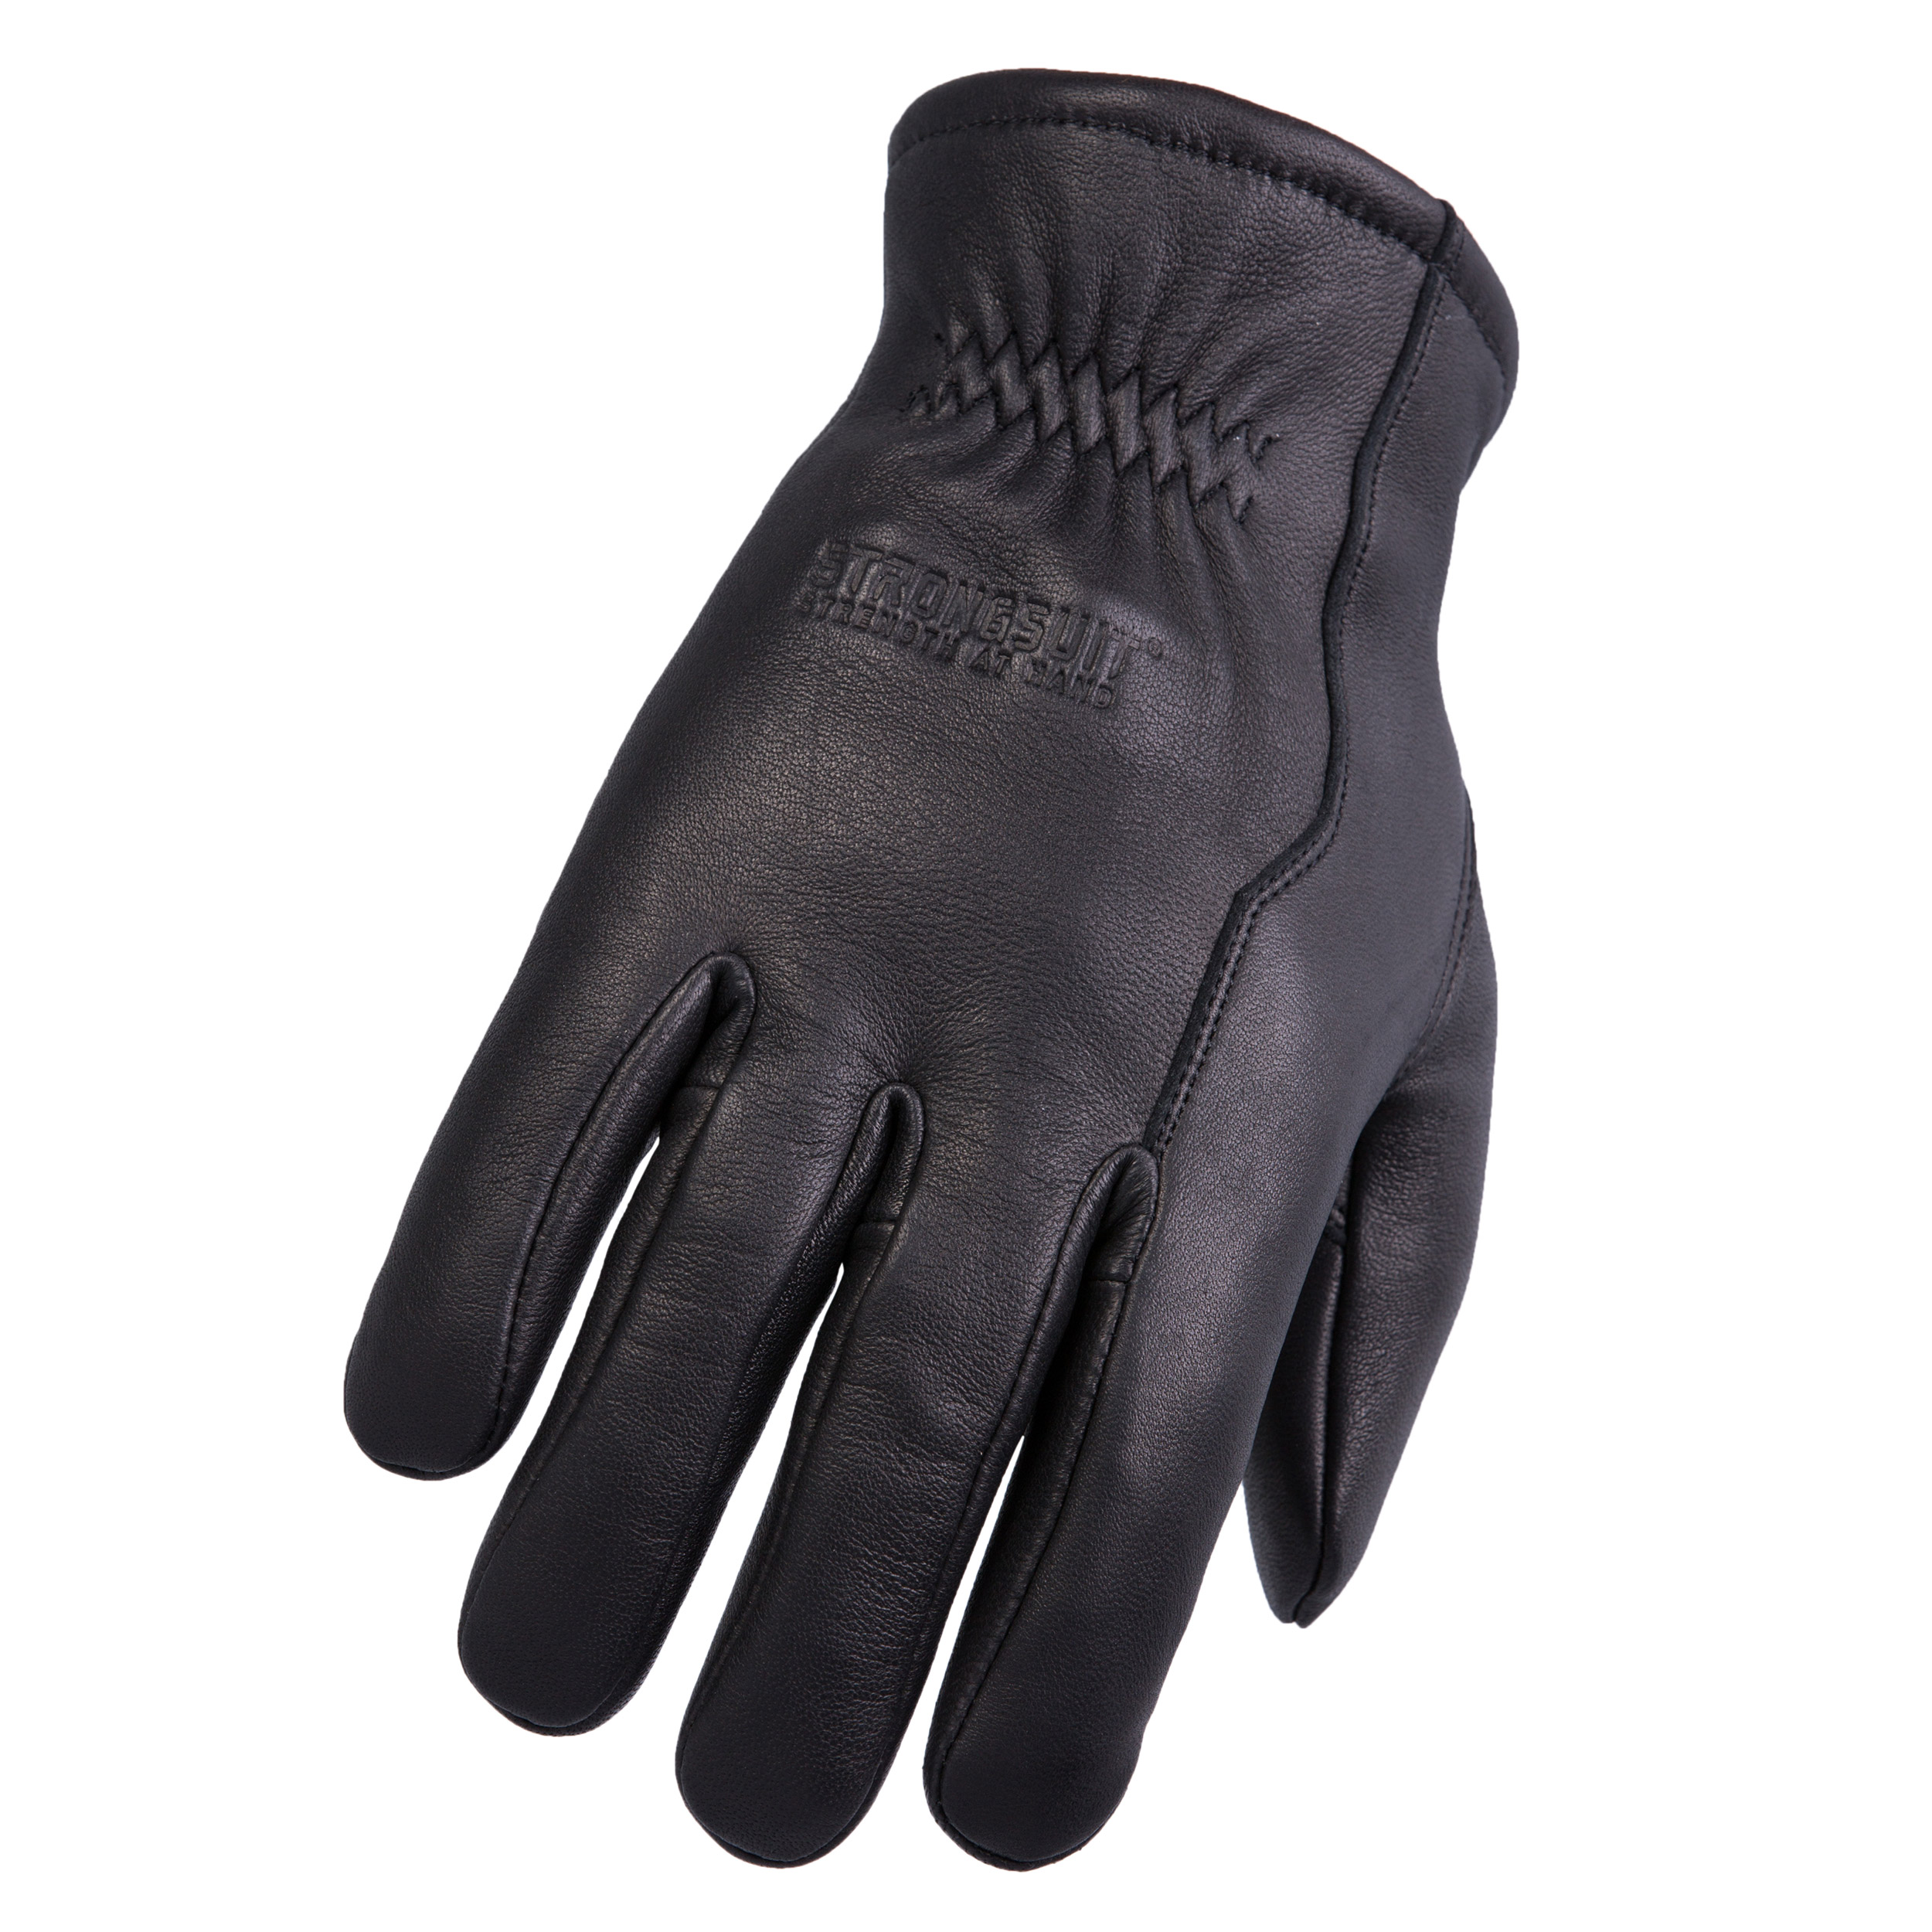 Weathermaster Gloves Medium